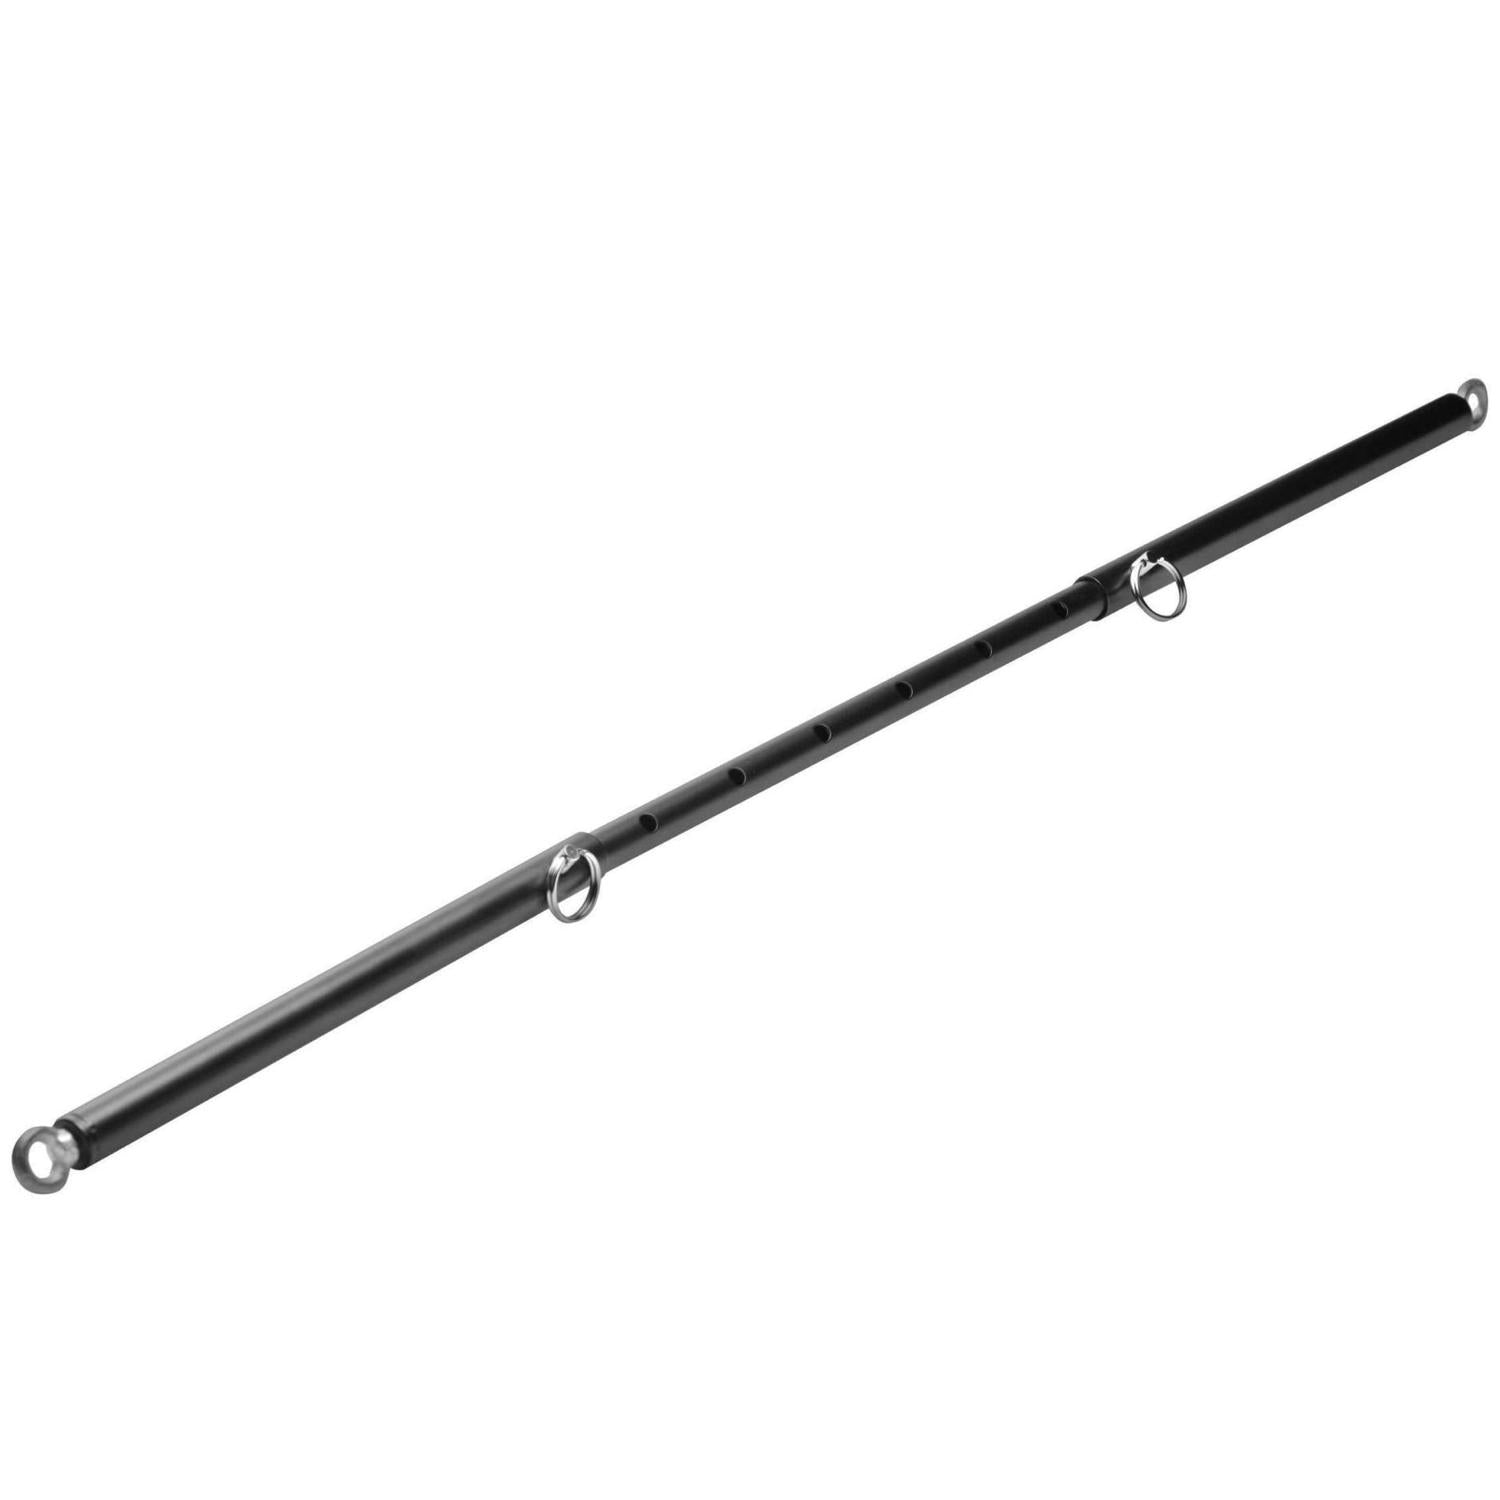 Adjustable Steel Spreader Bar